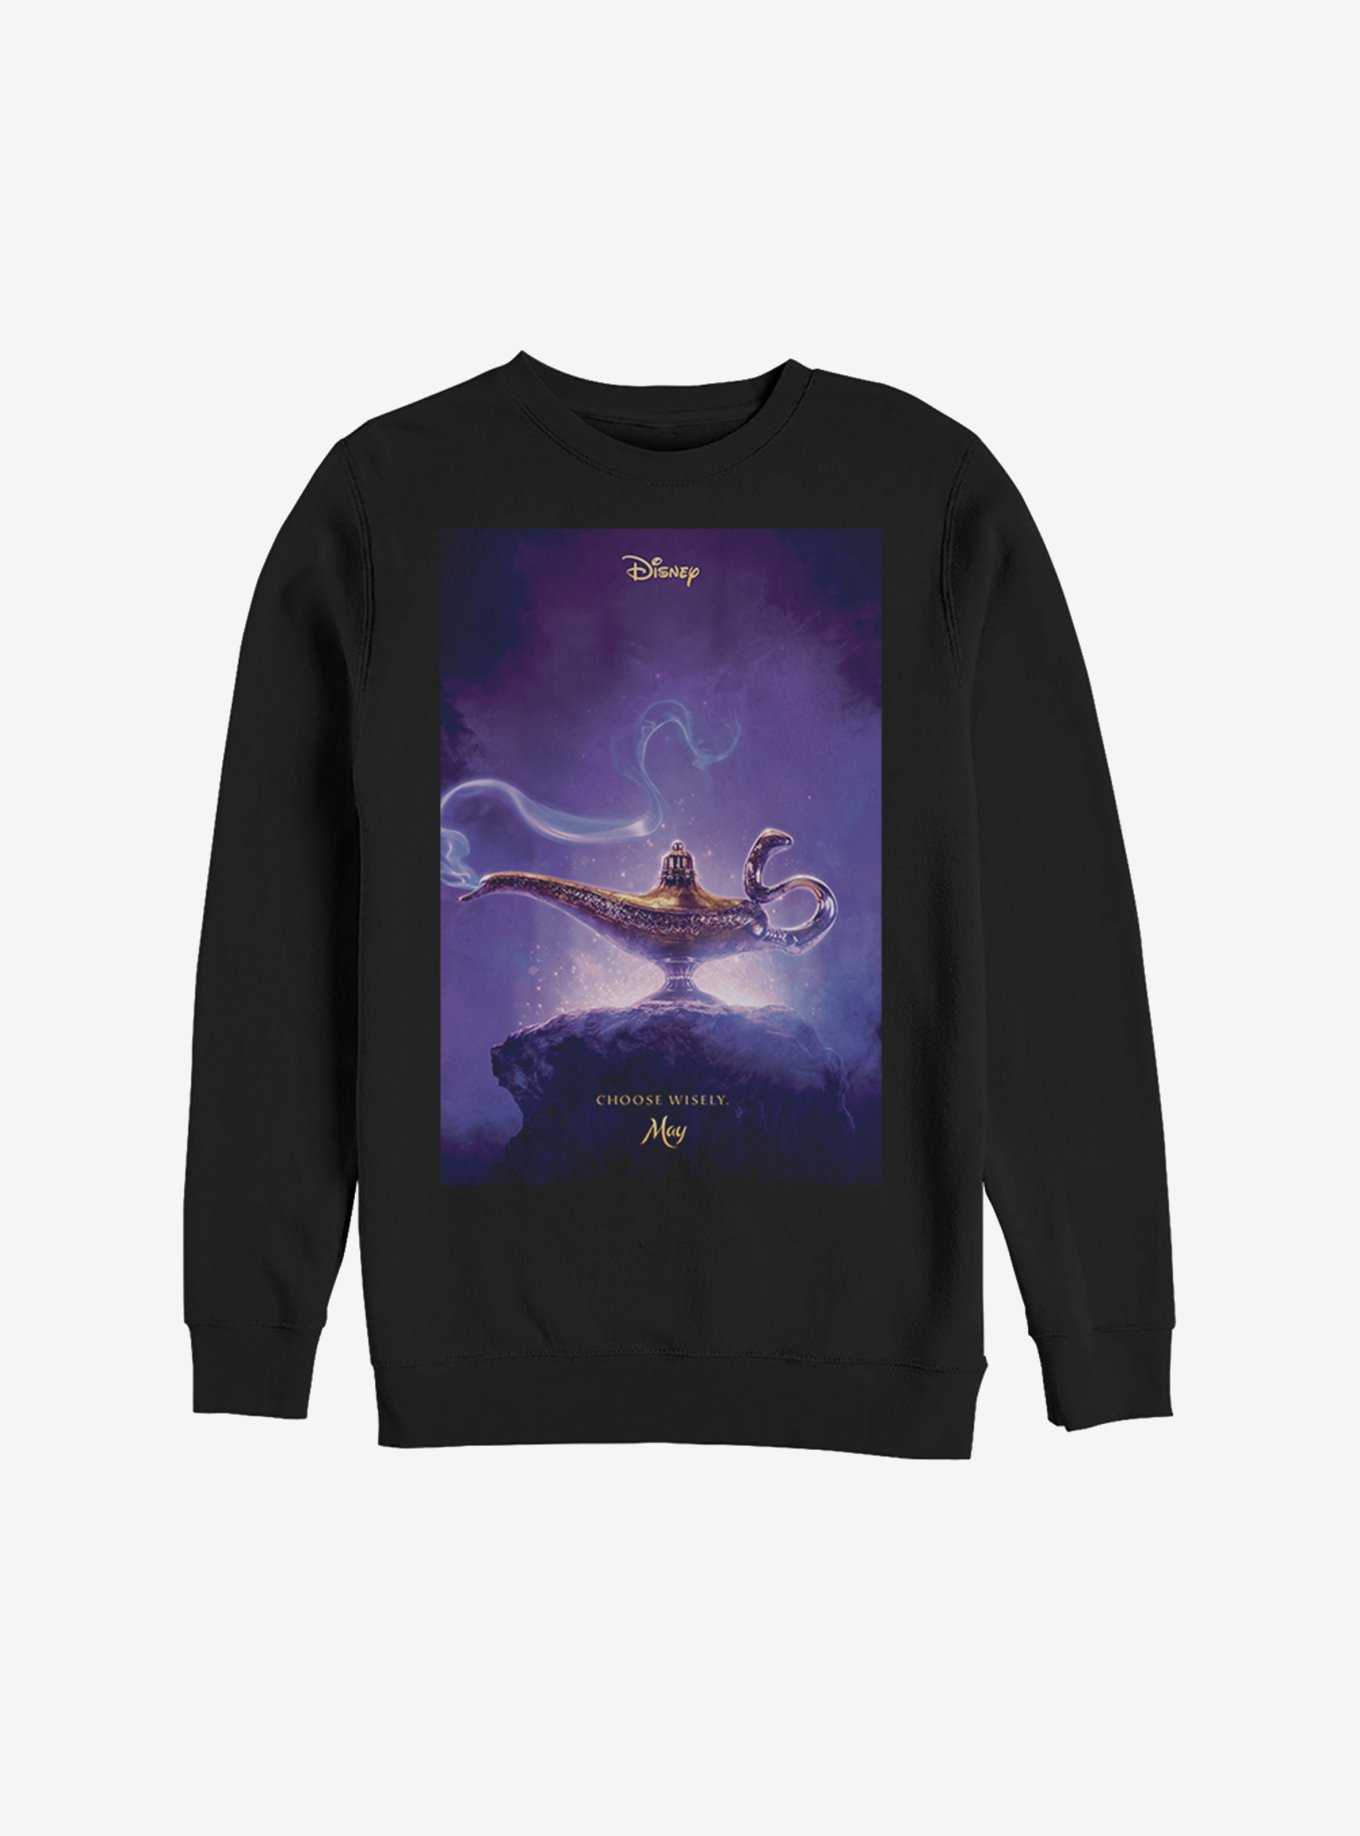 Disney Aladdin 2019 Live Action Poster Sweatshirt, , hi-res